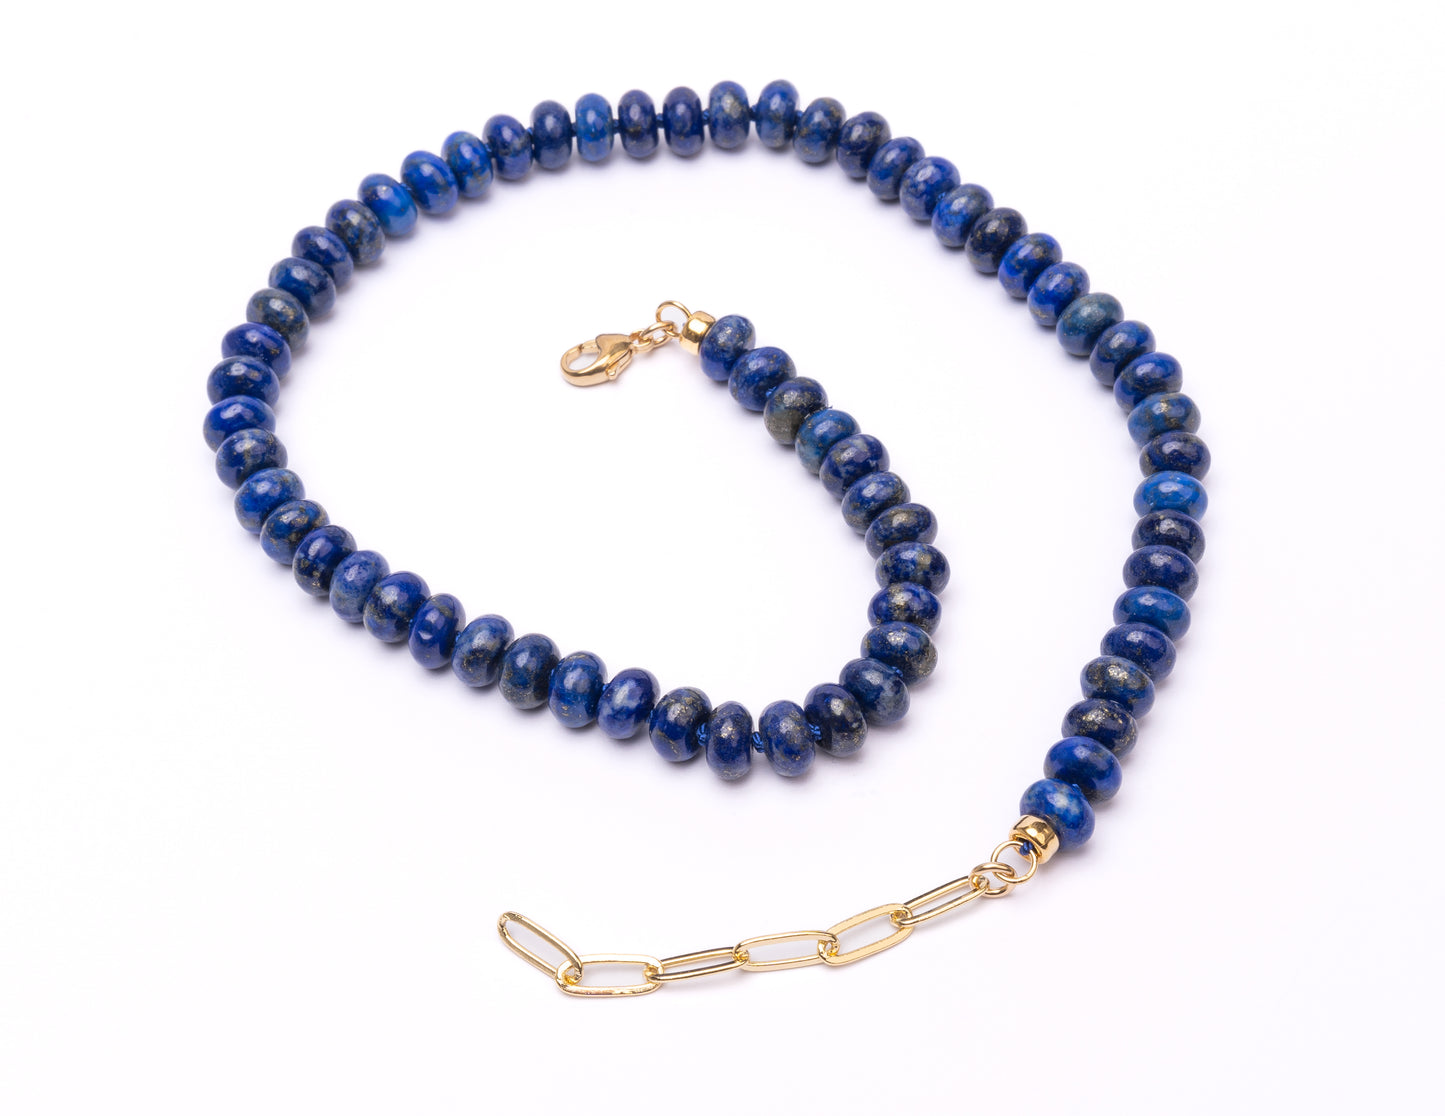 Lapis Lazuli Candy Necklace